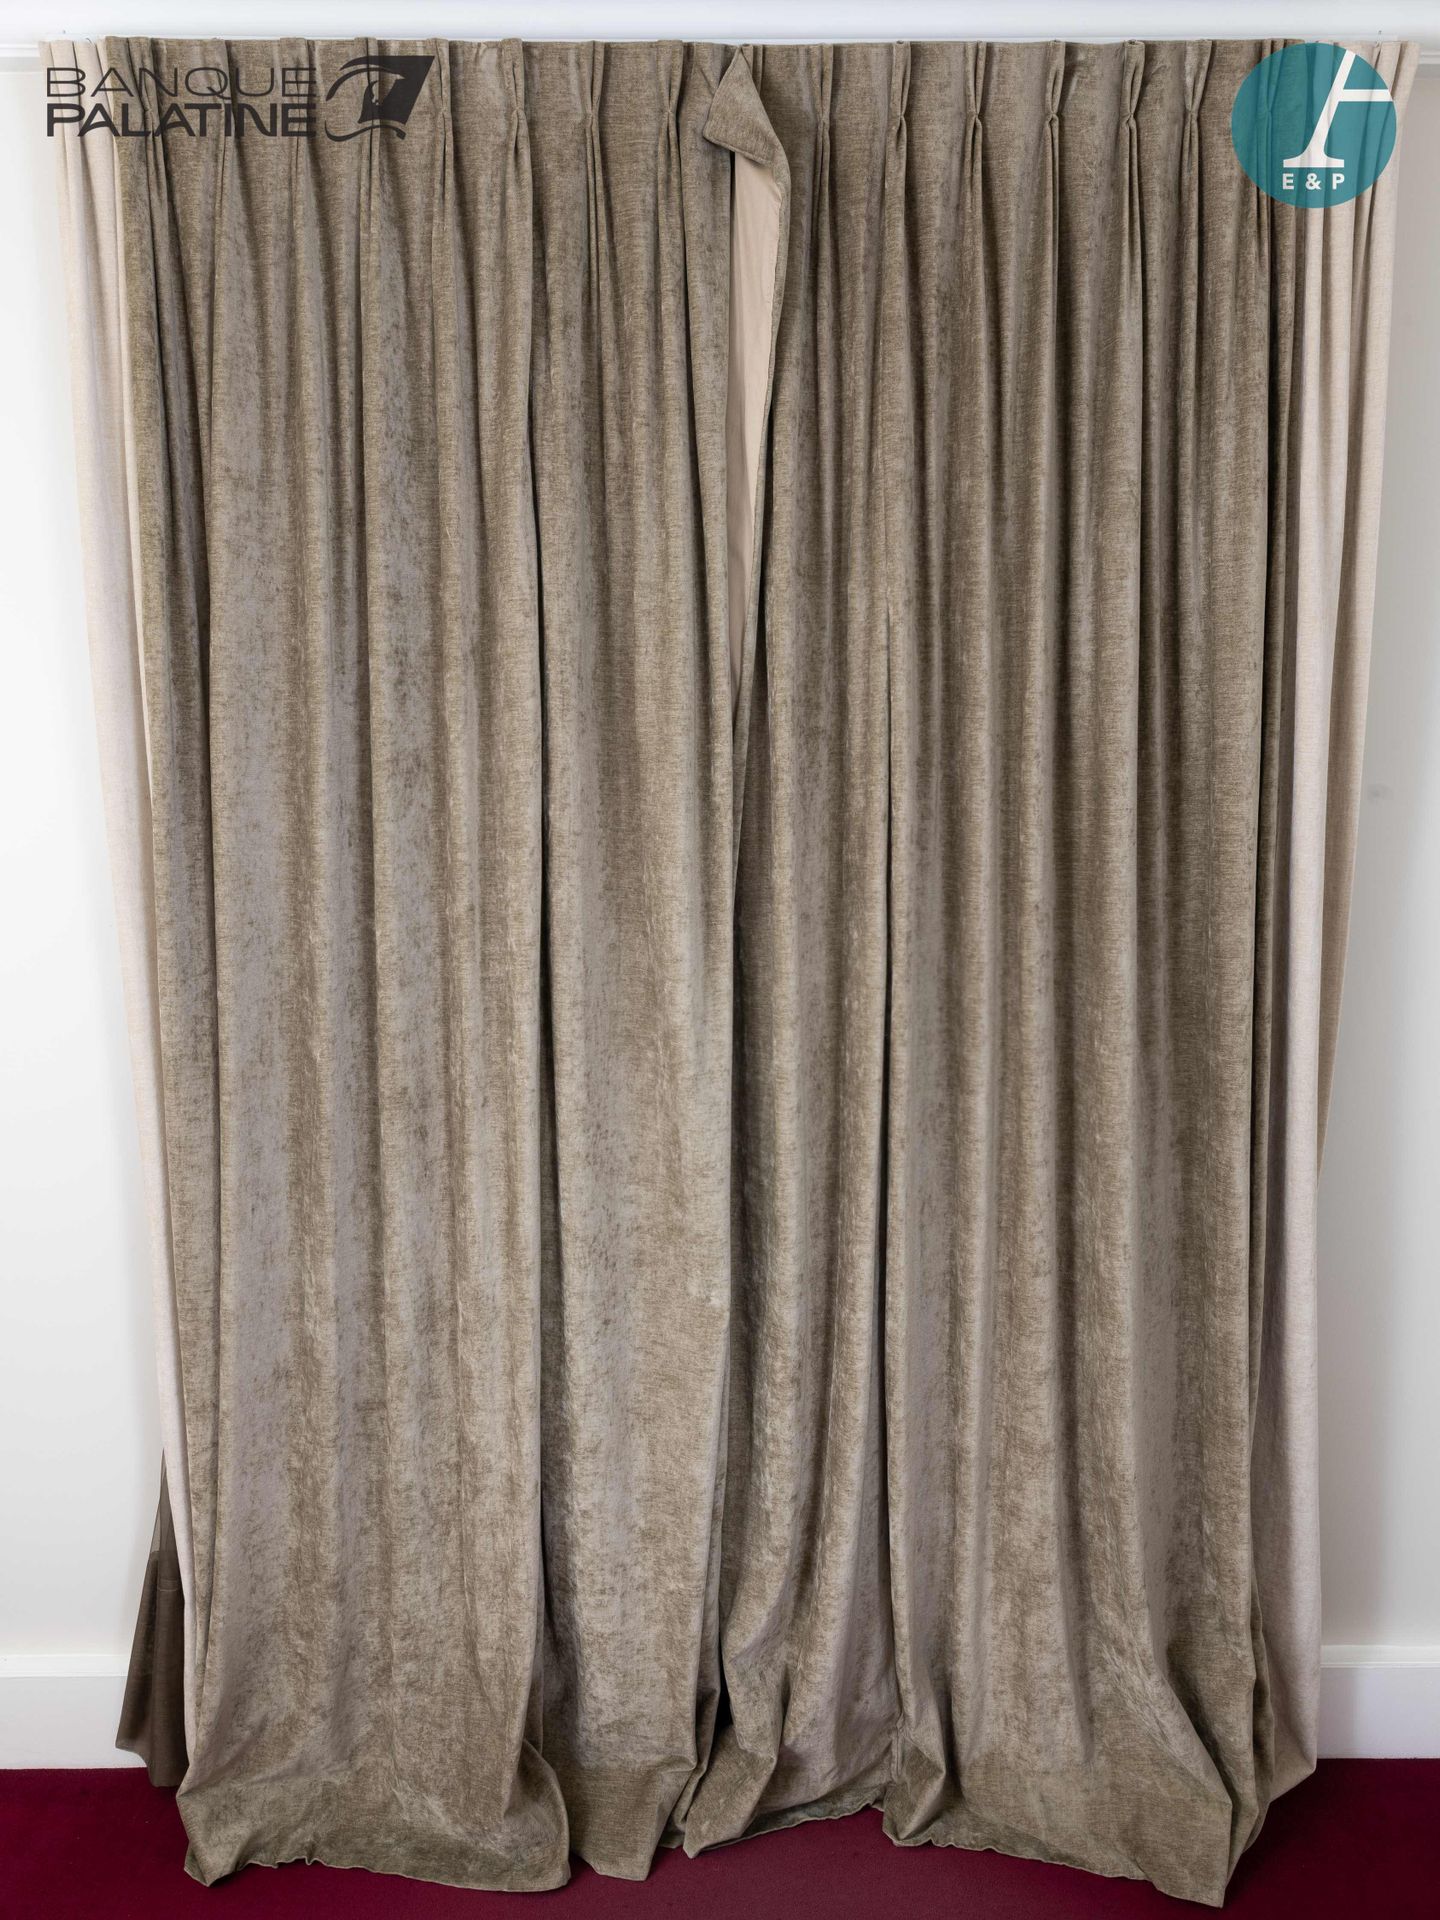 Null 一对灰色和米色的大窗帘。

高：约3.10米

宽：1.10米（1个面板）